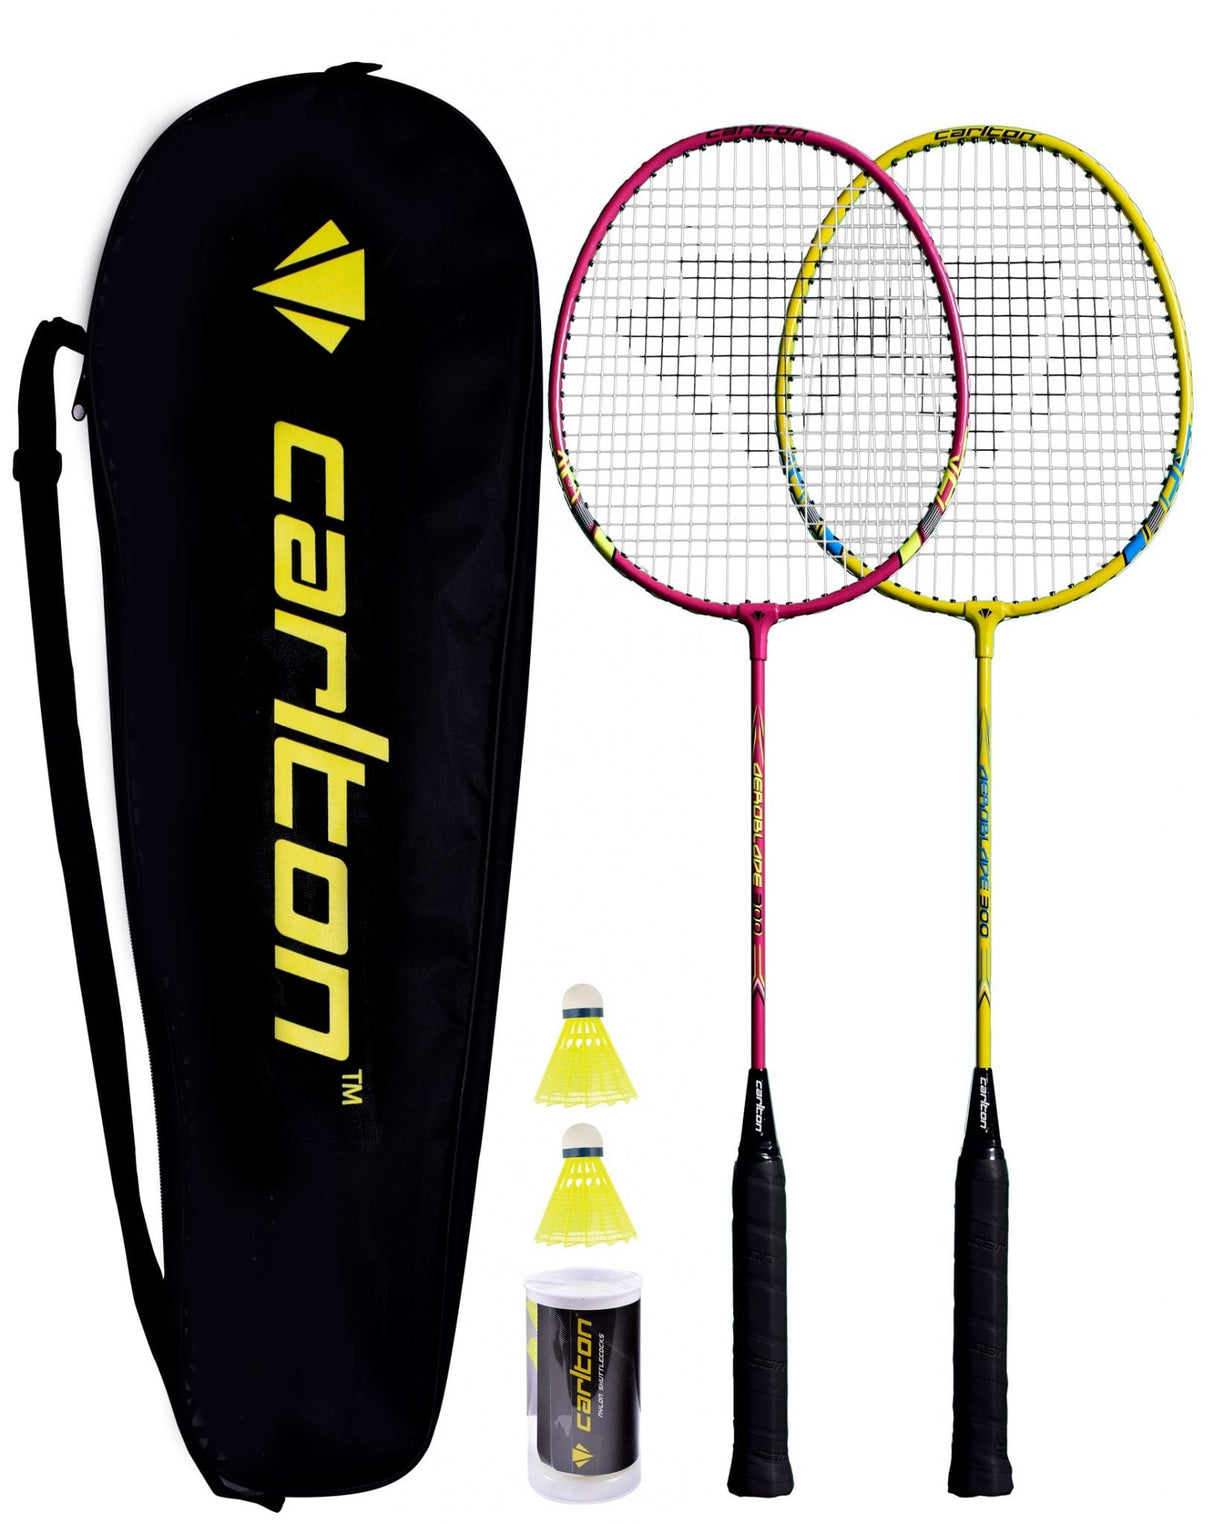 Carlton Aeroblade 700 Badminton Racket Set